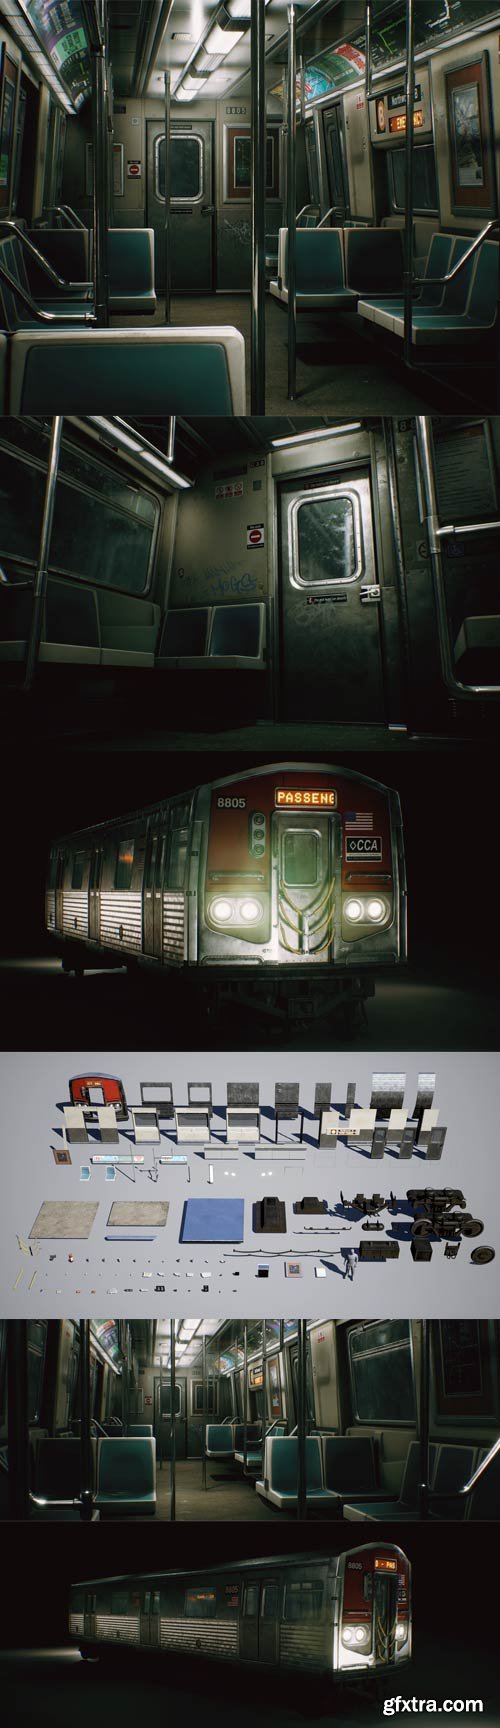 Cube Brush - City Subway Train